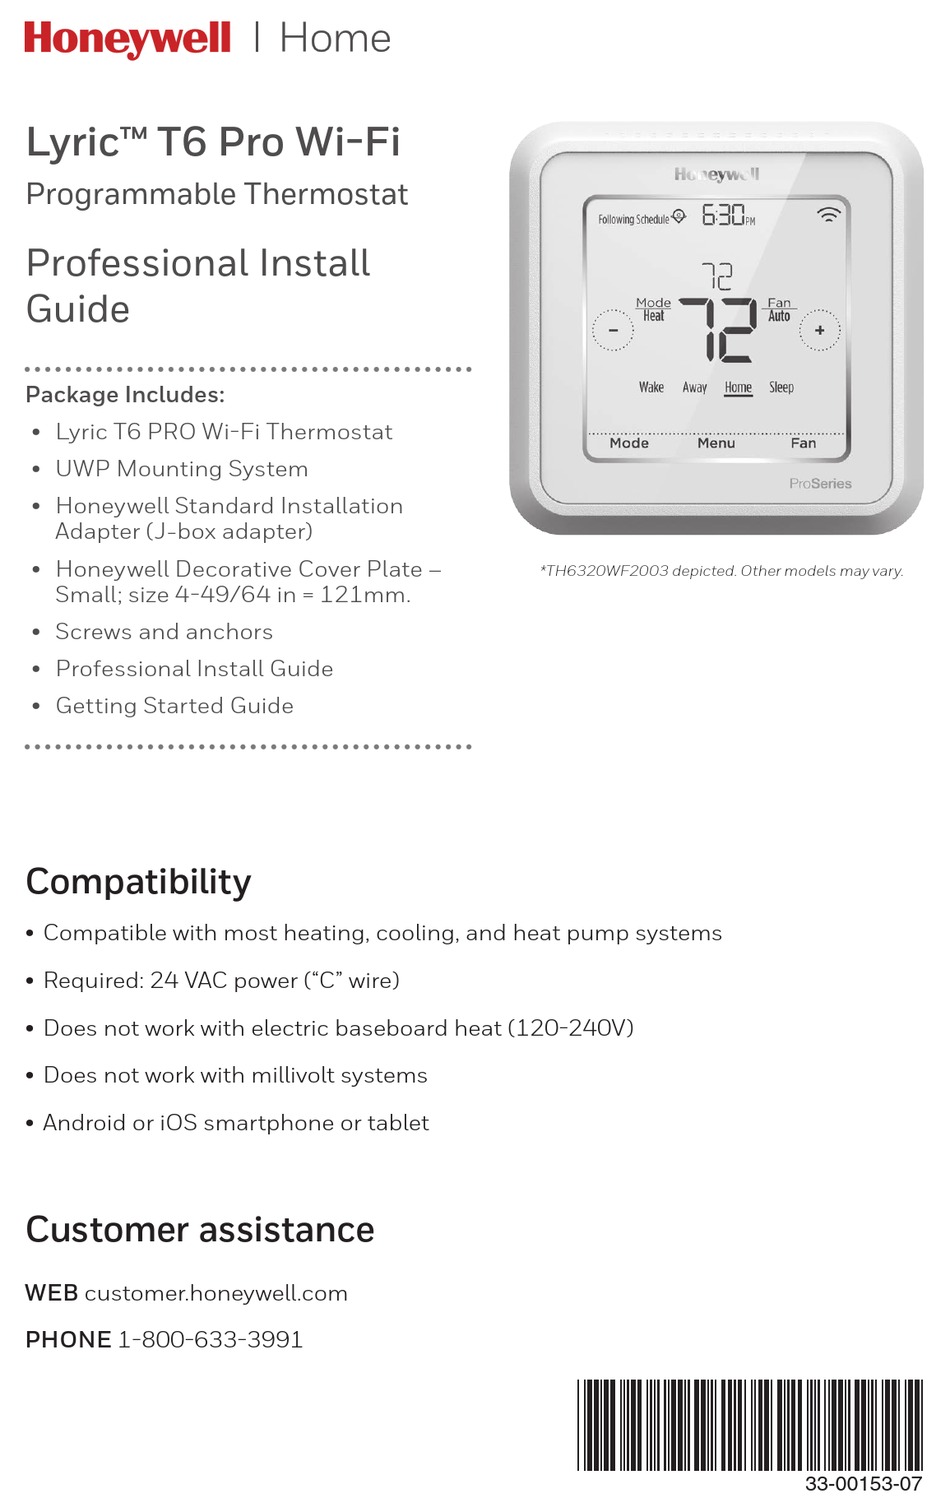 Honeywell Lyric T6 Pro Wifi Manual - LYRICUT